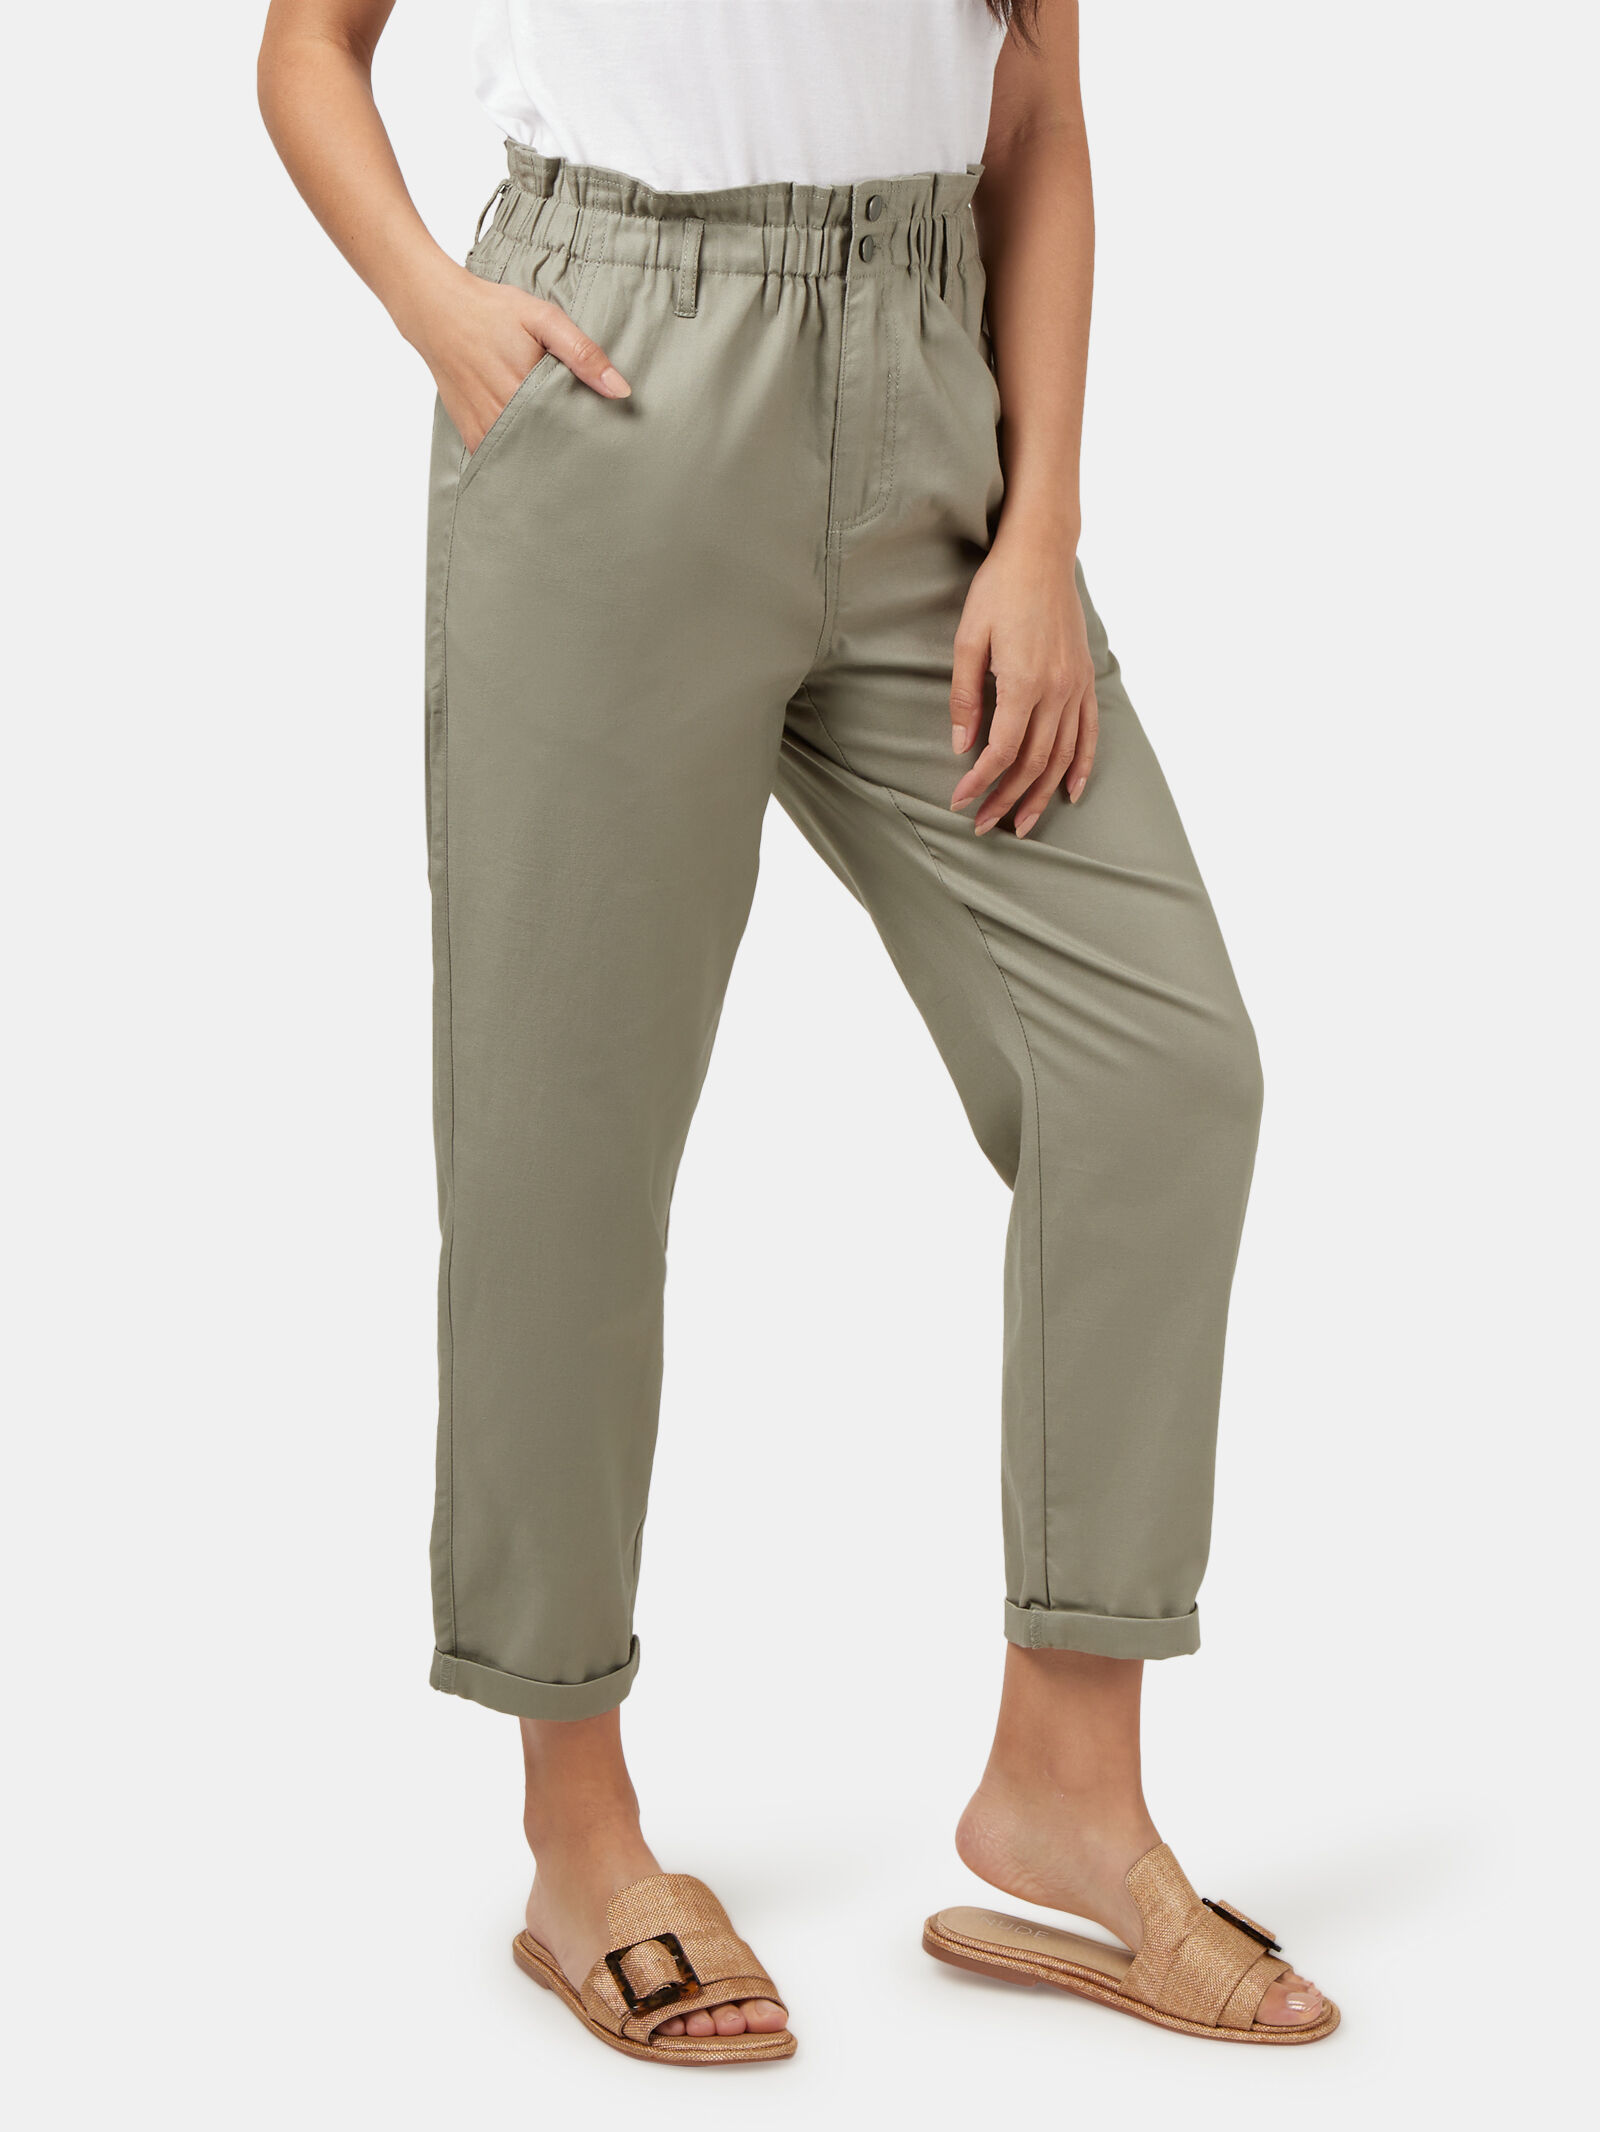 Buy Brown Trousers  Pants for Women by AJIO Online  Ajiocom